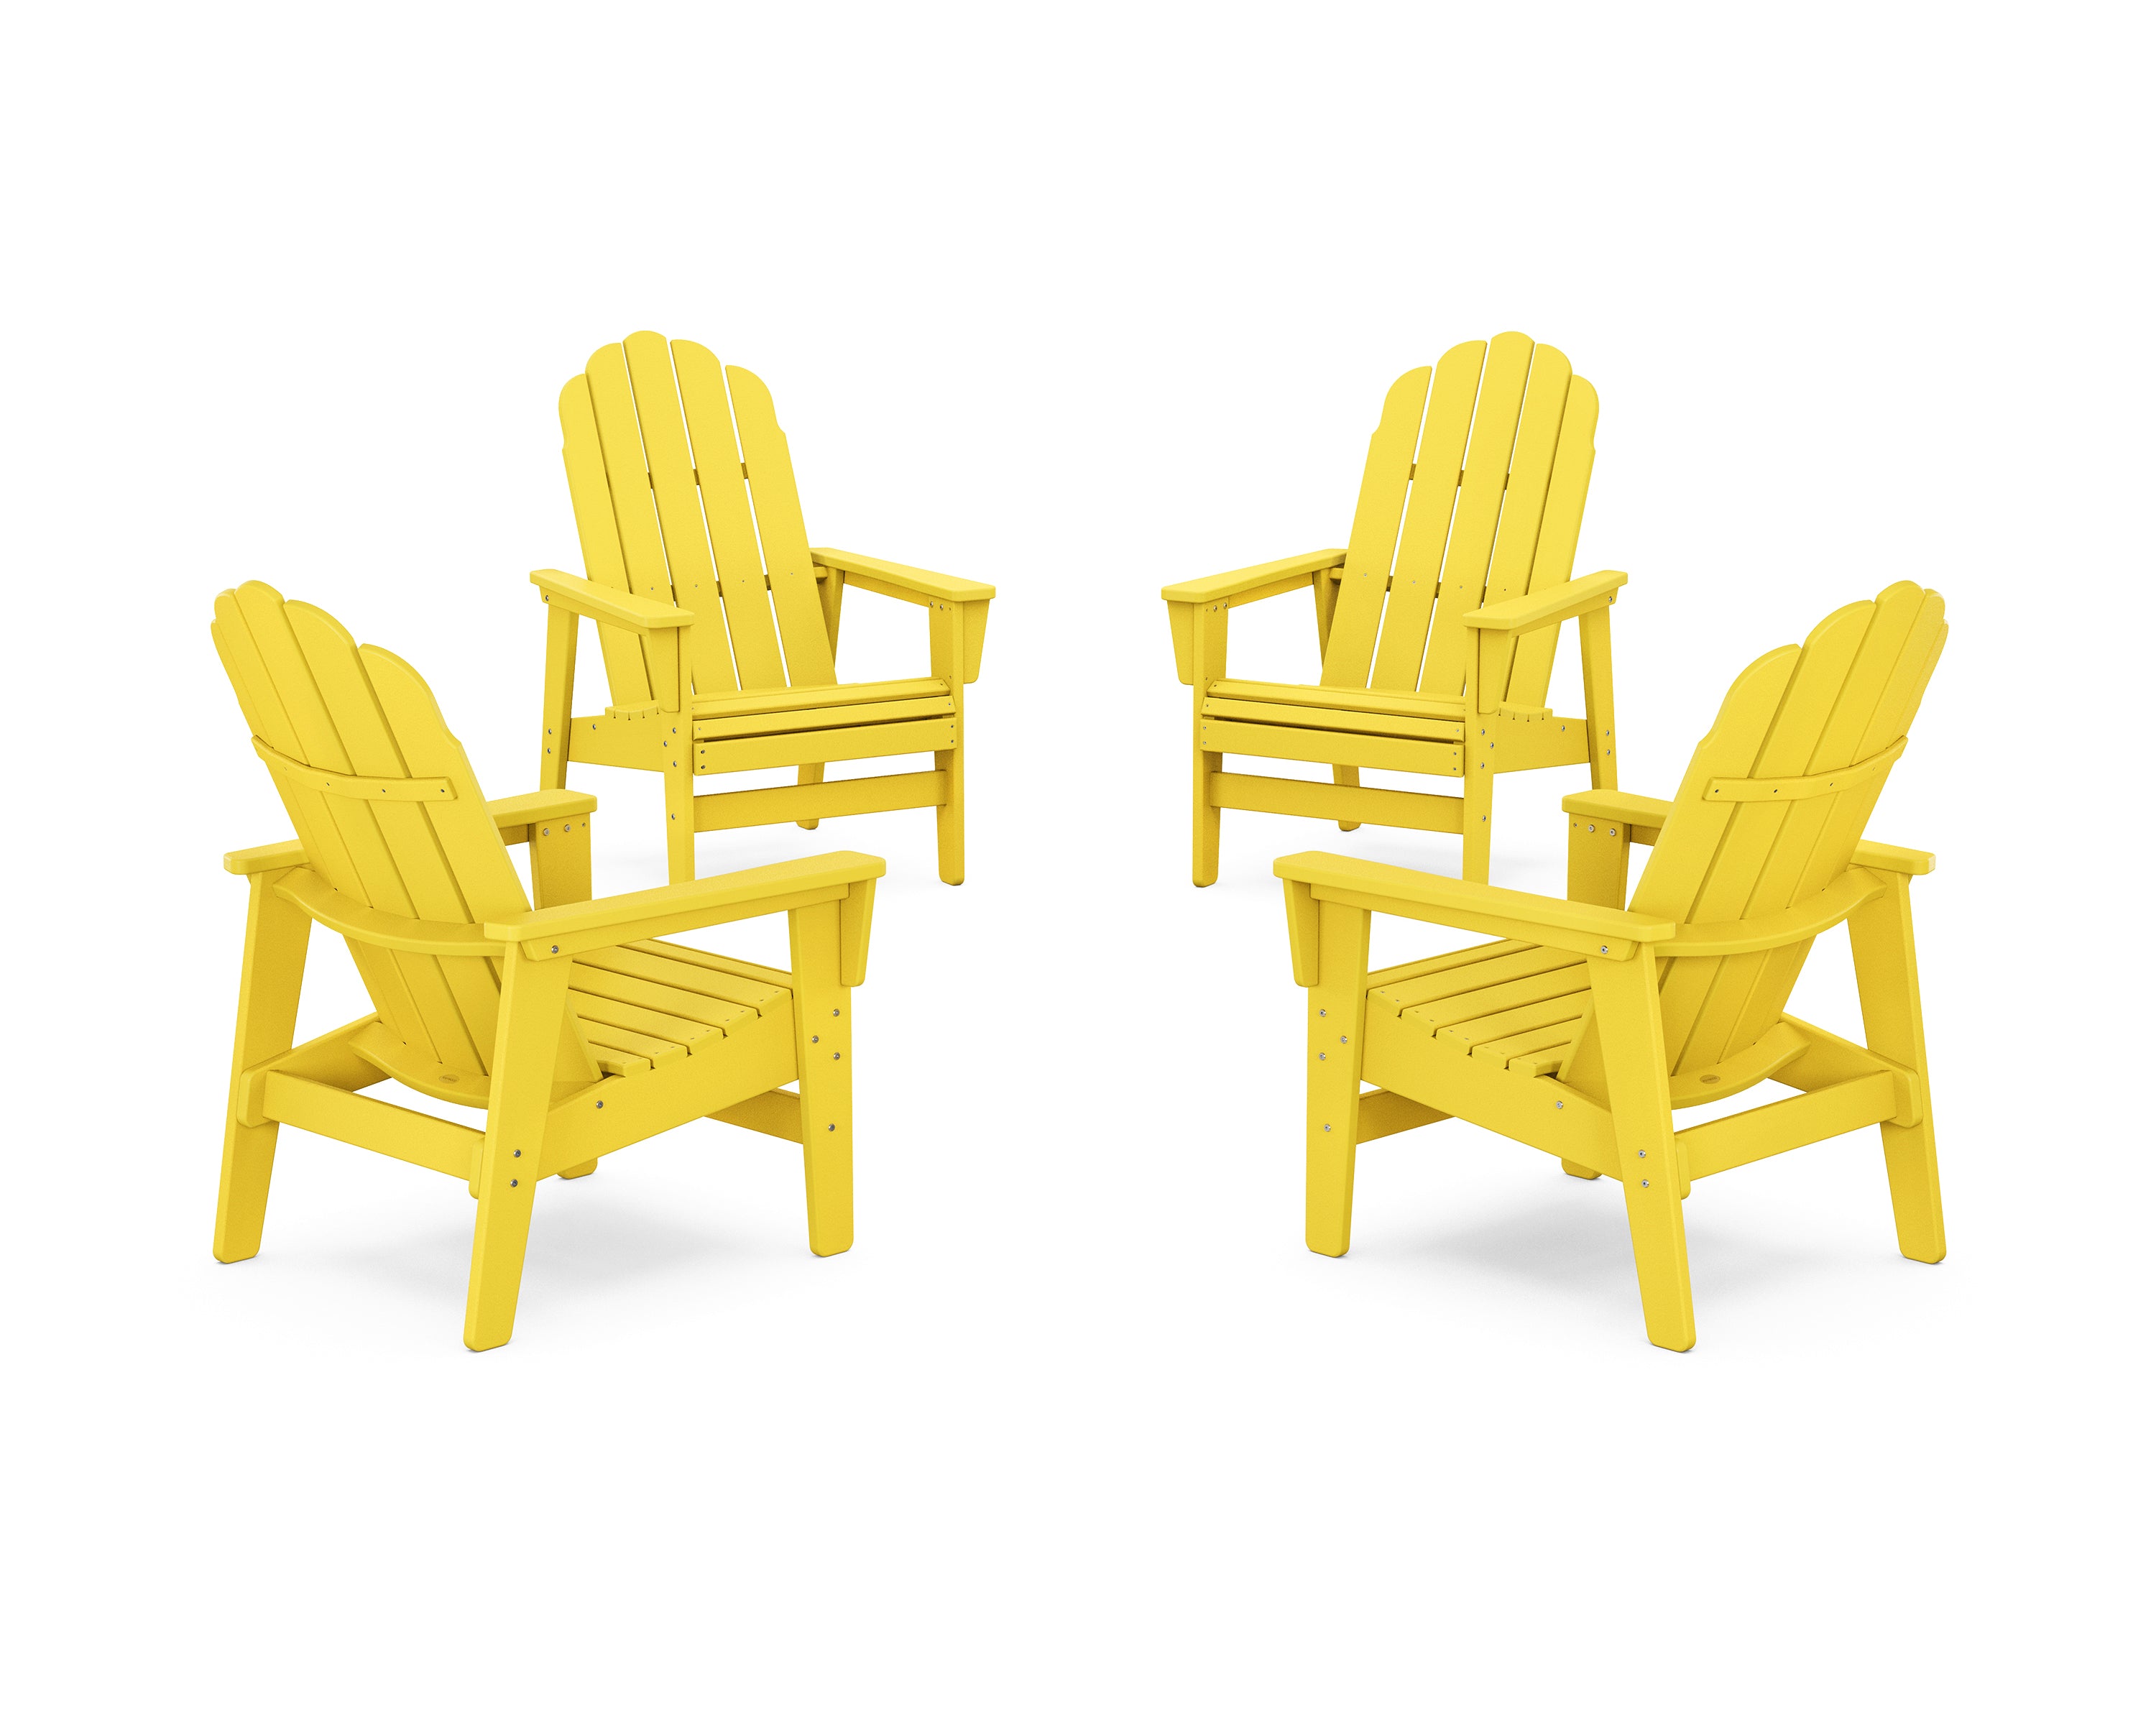 POLYWOOD® 4-Piece Vineyard Grand Upright Adirondack Chair Conversation Set in Lemon